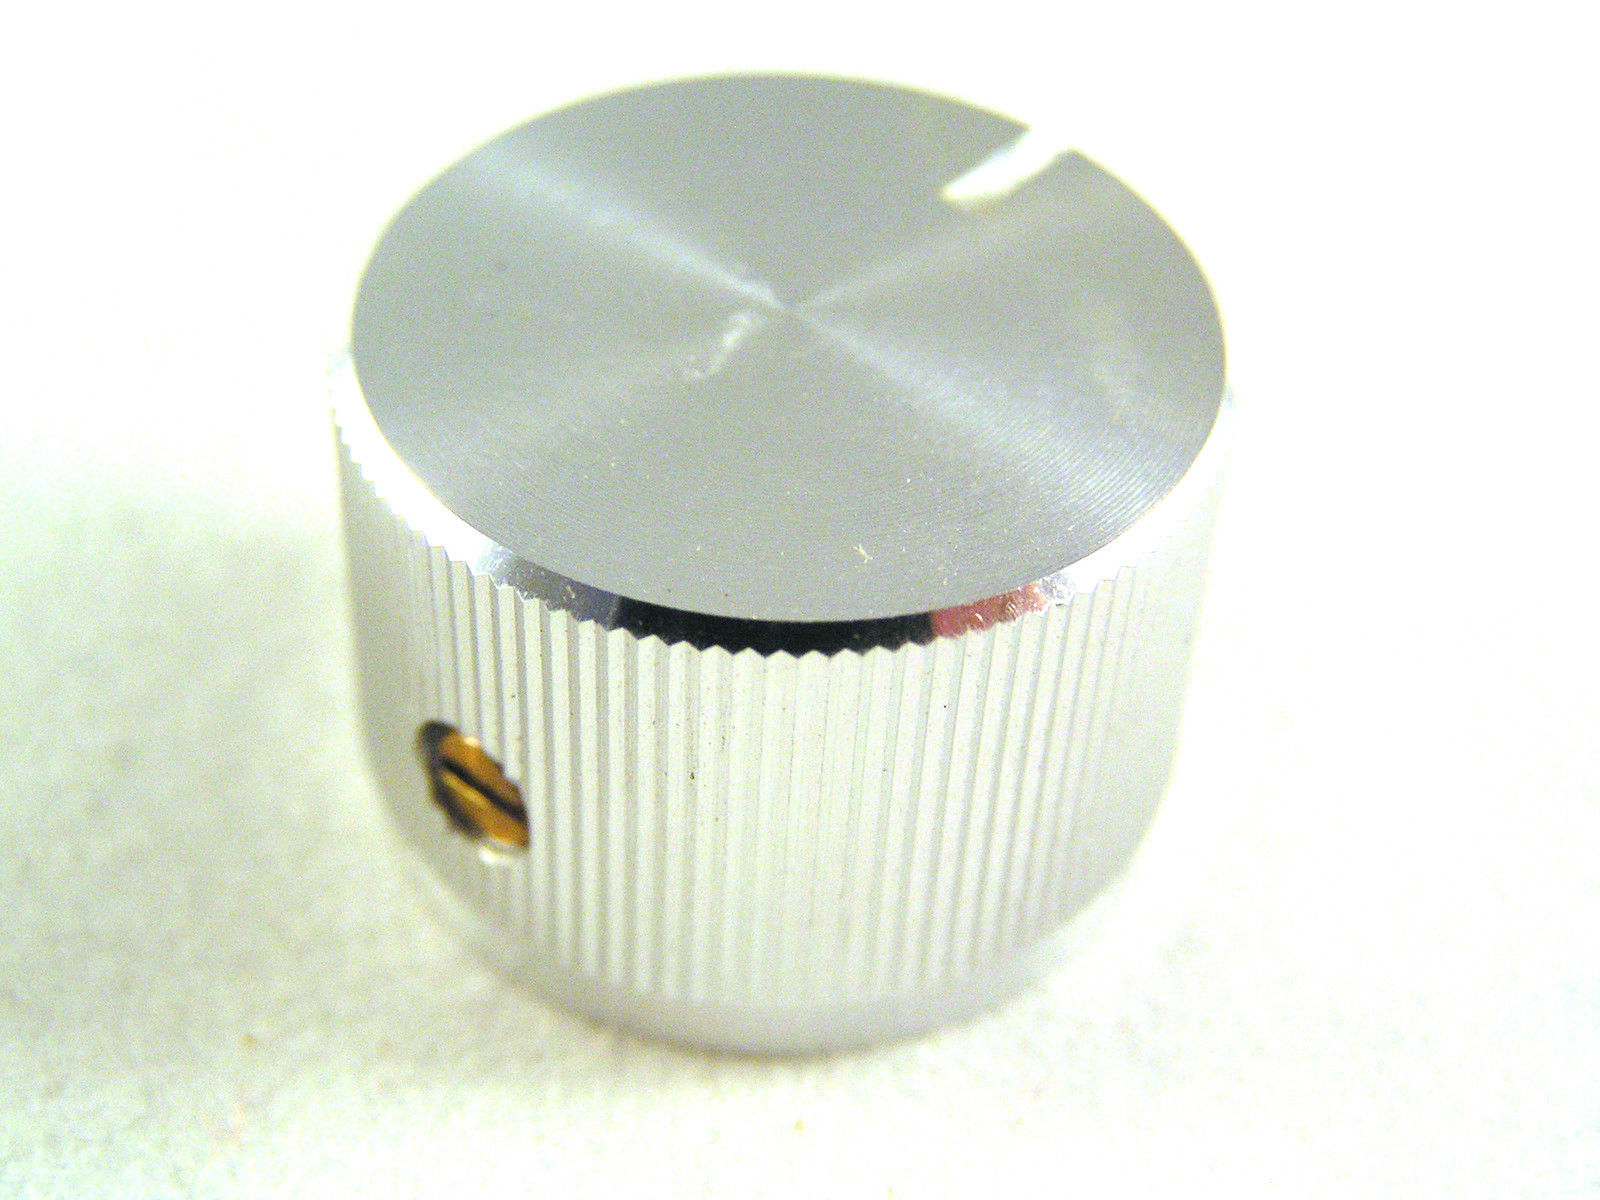 Solid Aluminium 26mm Control Knob Fits 1/4" Shaft Grub Screw Fix OM0326a 6.4mm 